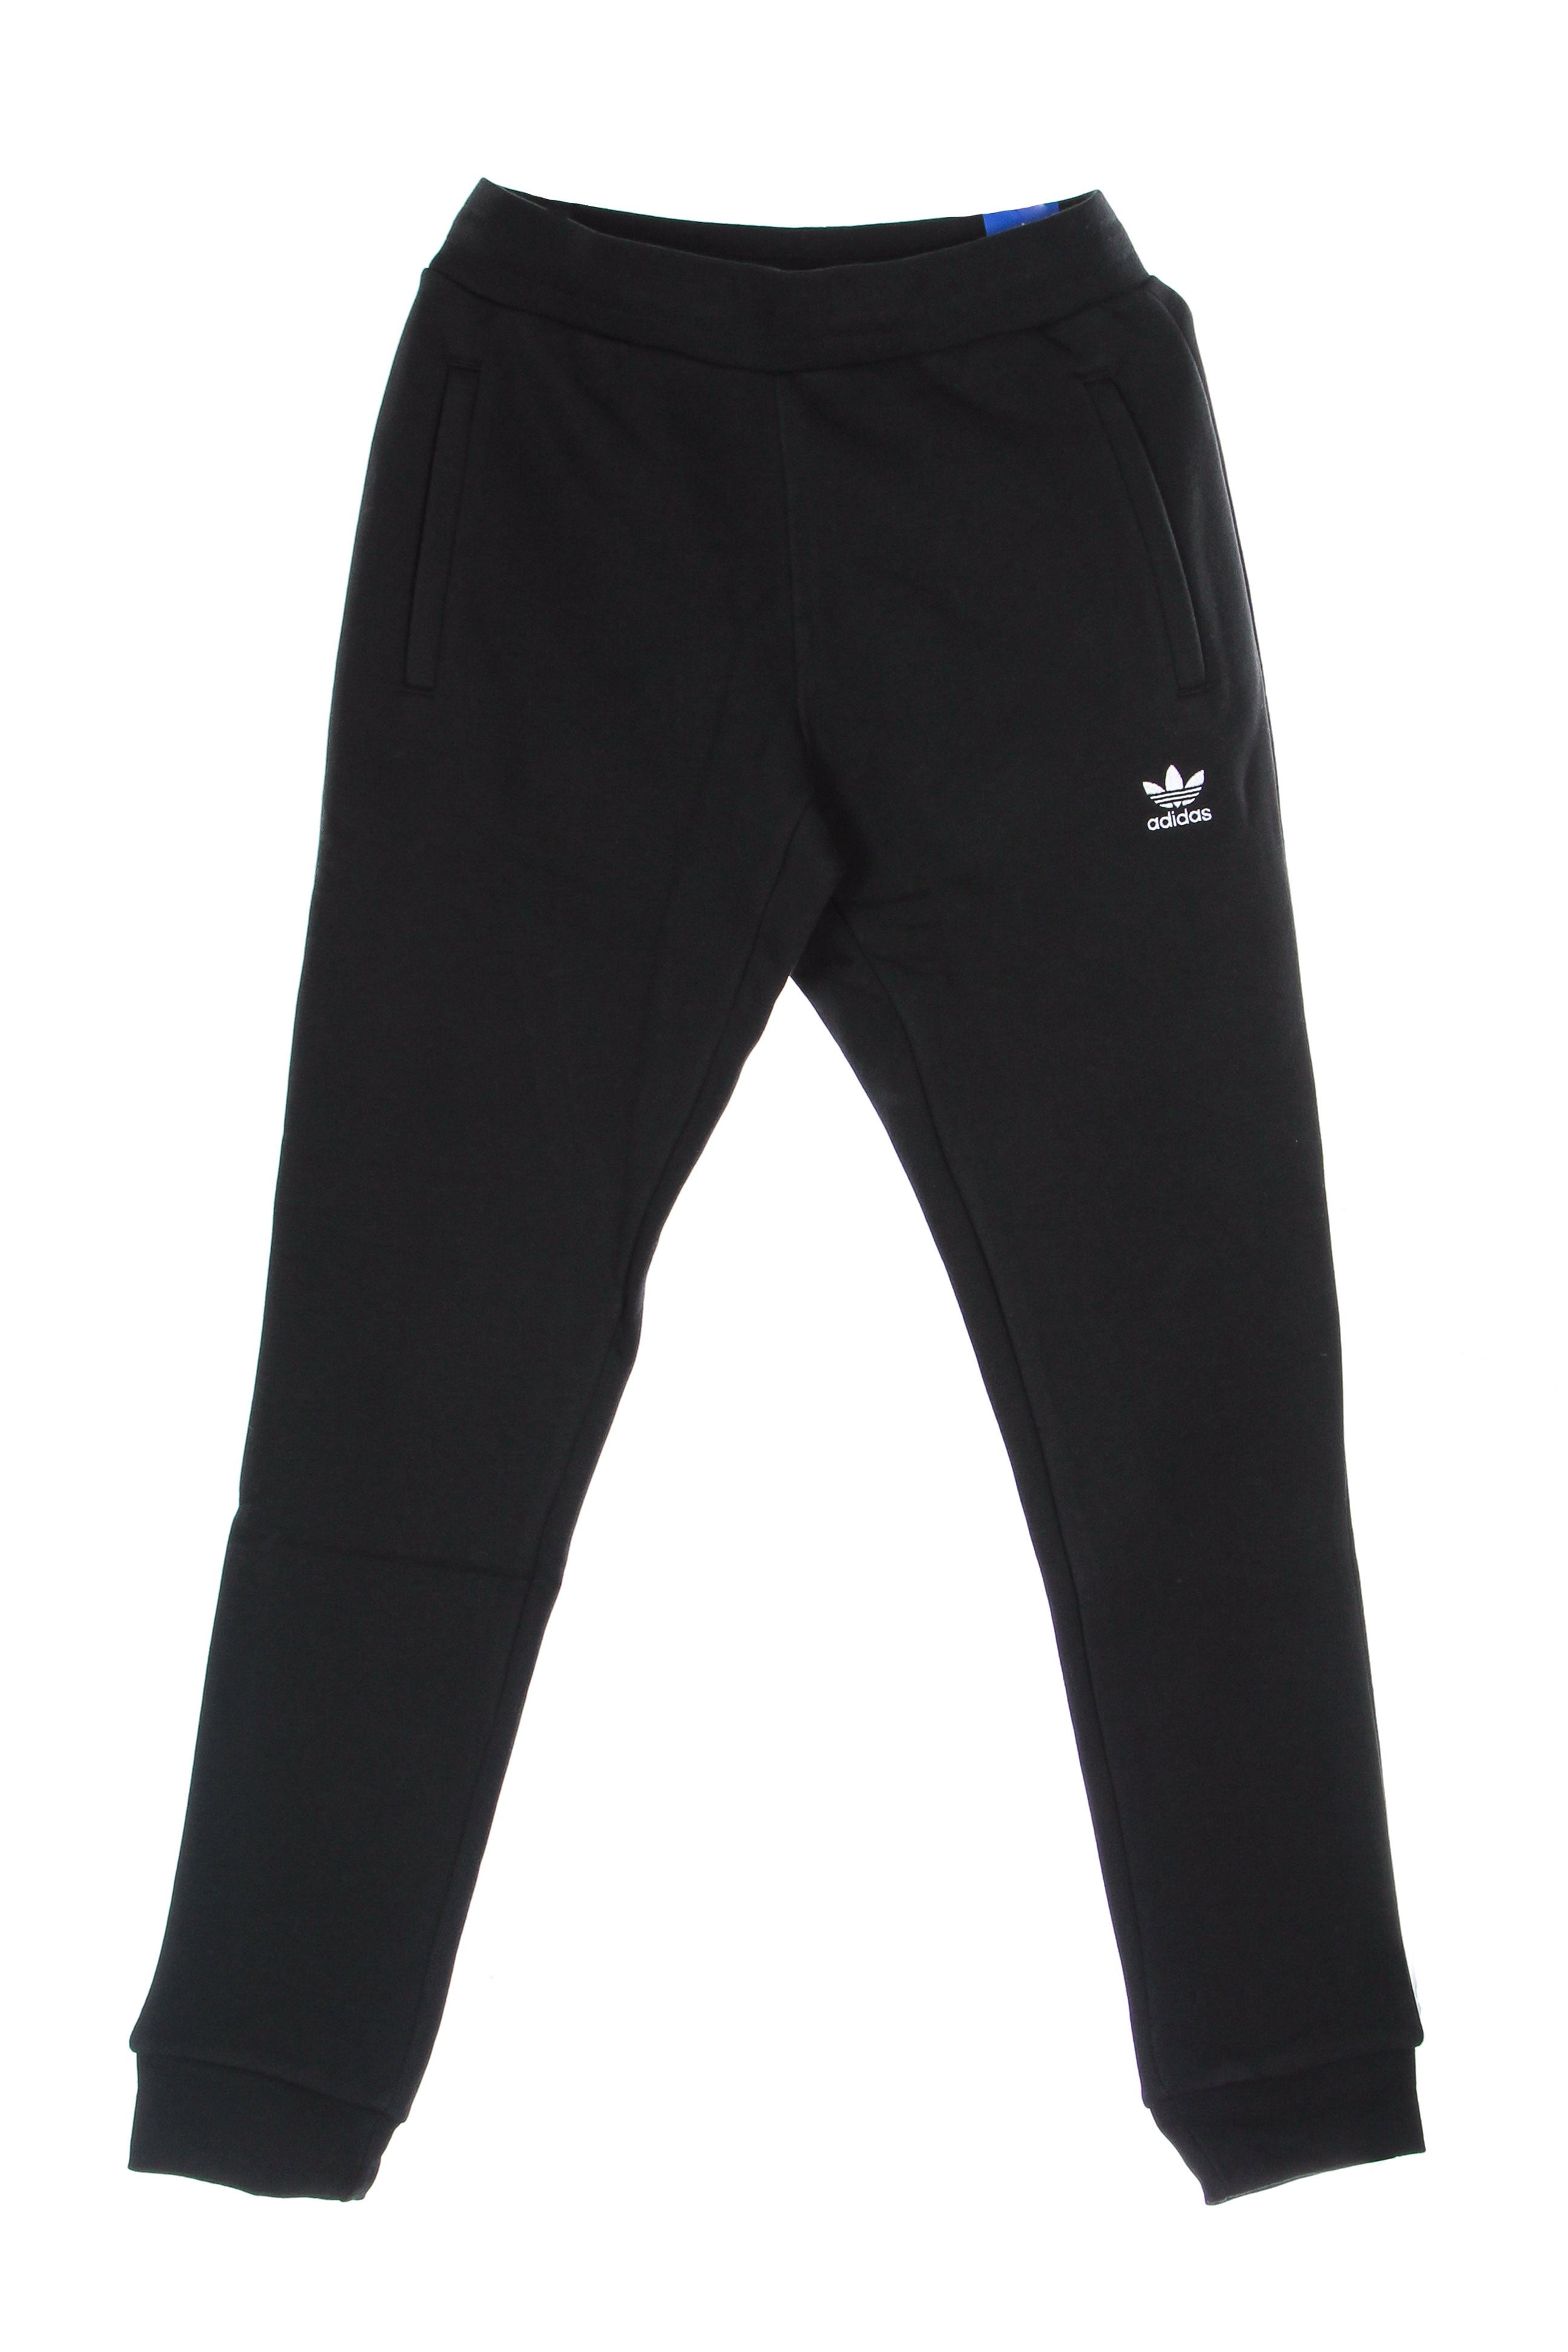 Adidas, Pantalone Tuta Felpato Uomo Essentials Adicolor Trefoil Pant, Black